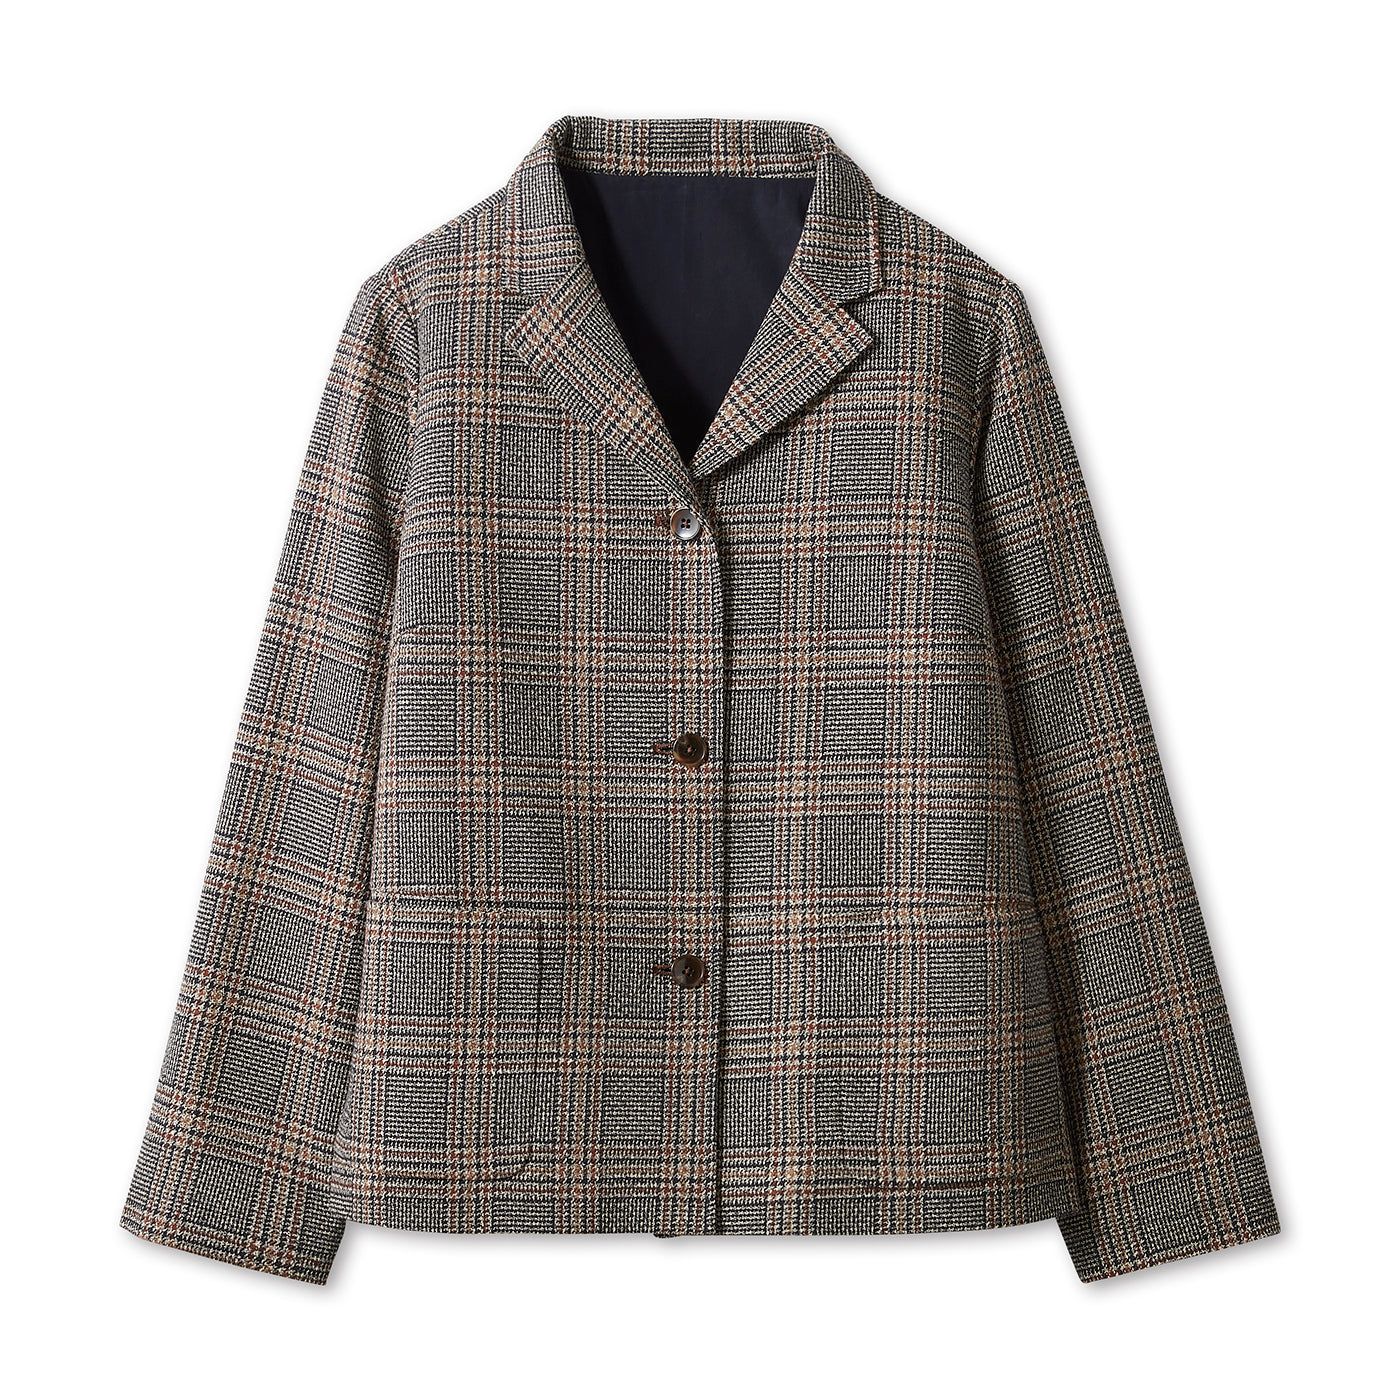 Cotton Tweed 100% Cotton Jacket Winter Outfit For Women KIGOKOCHI Japan